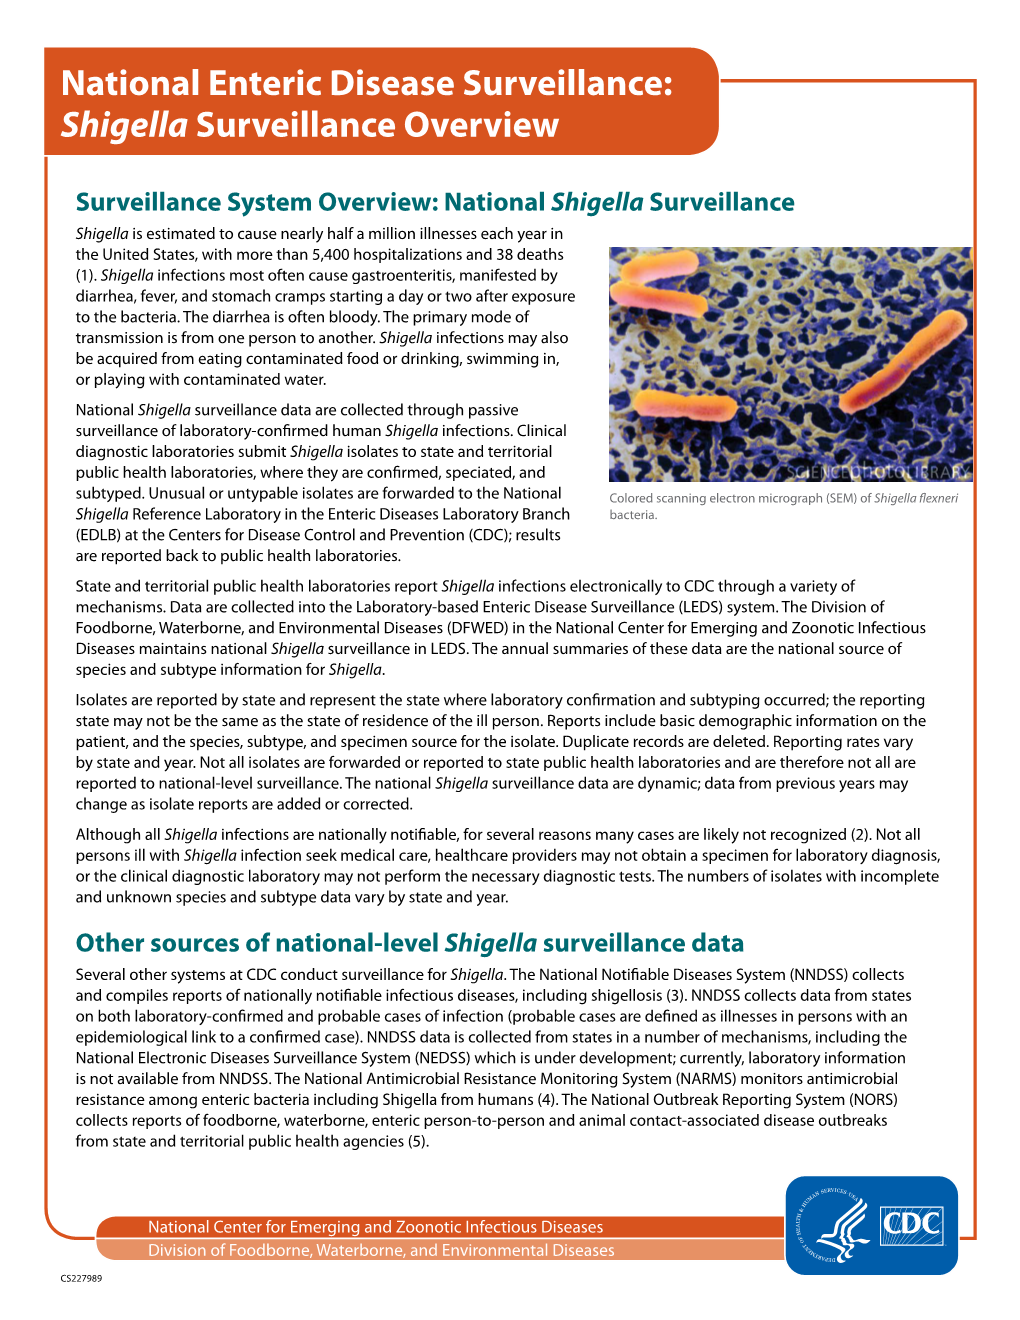 Shigella Surveillance Overview